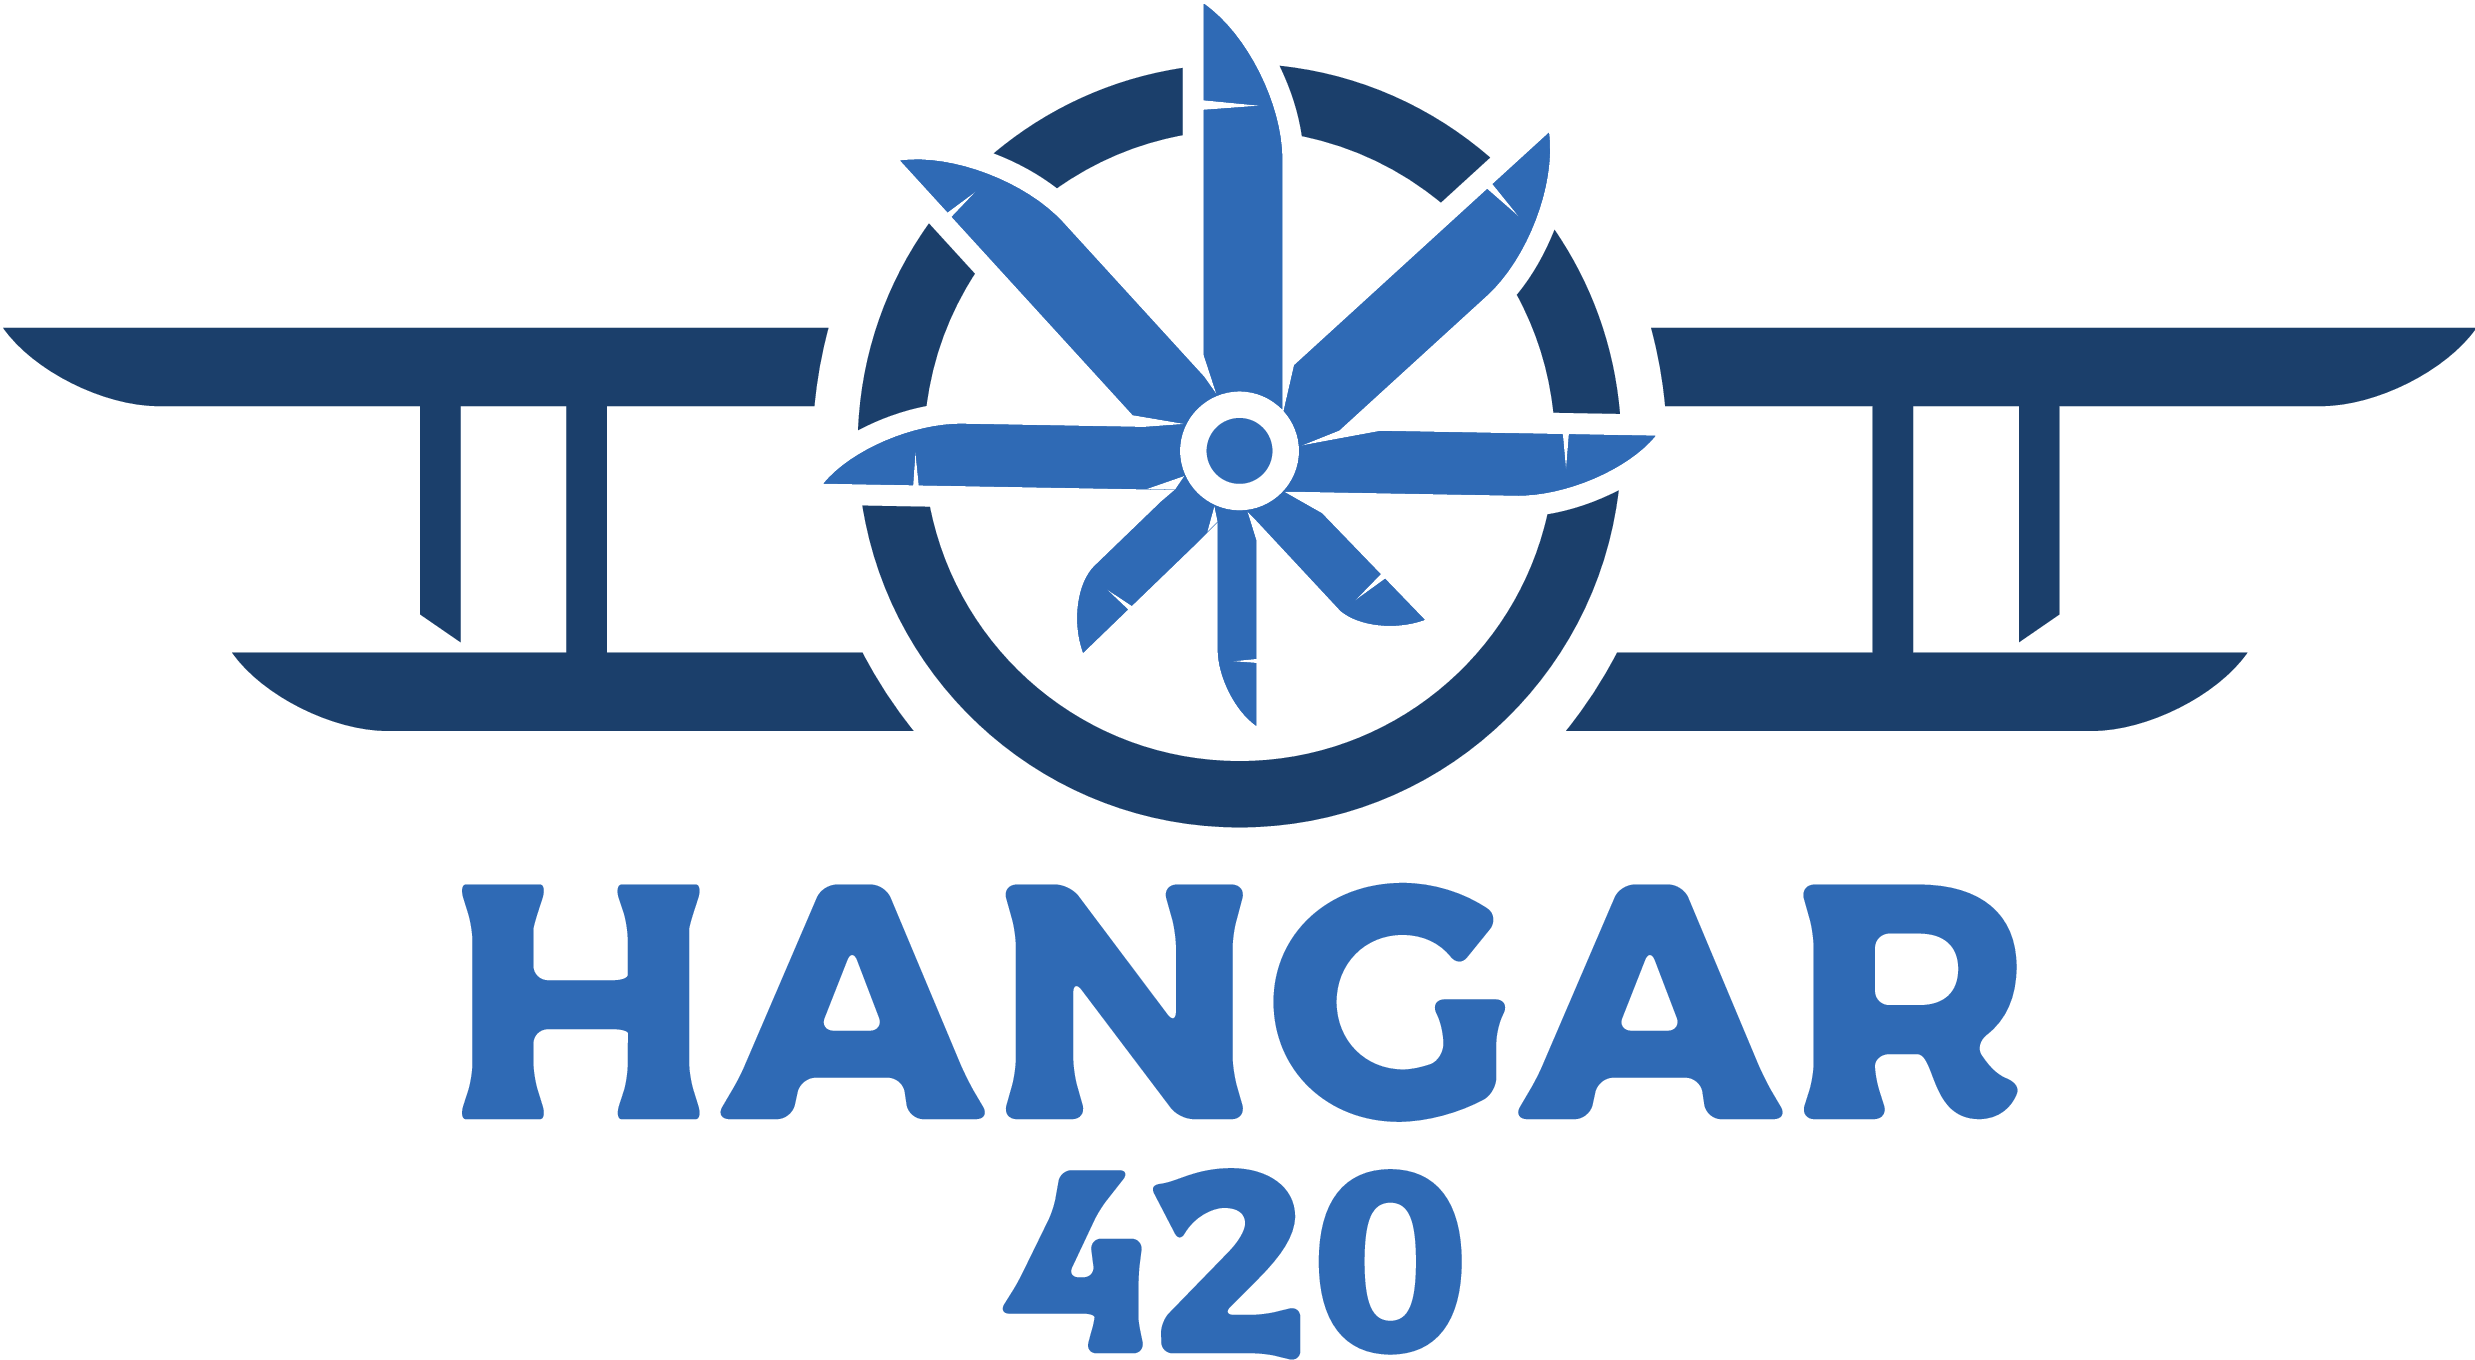 Hangar 420